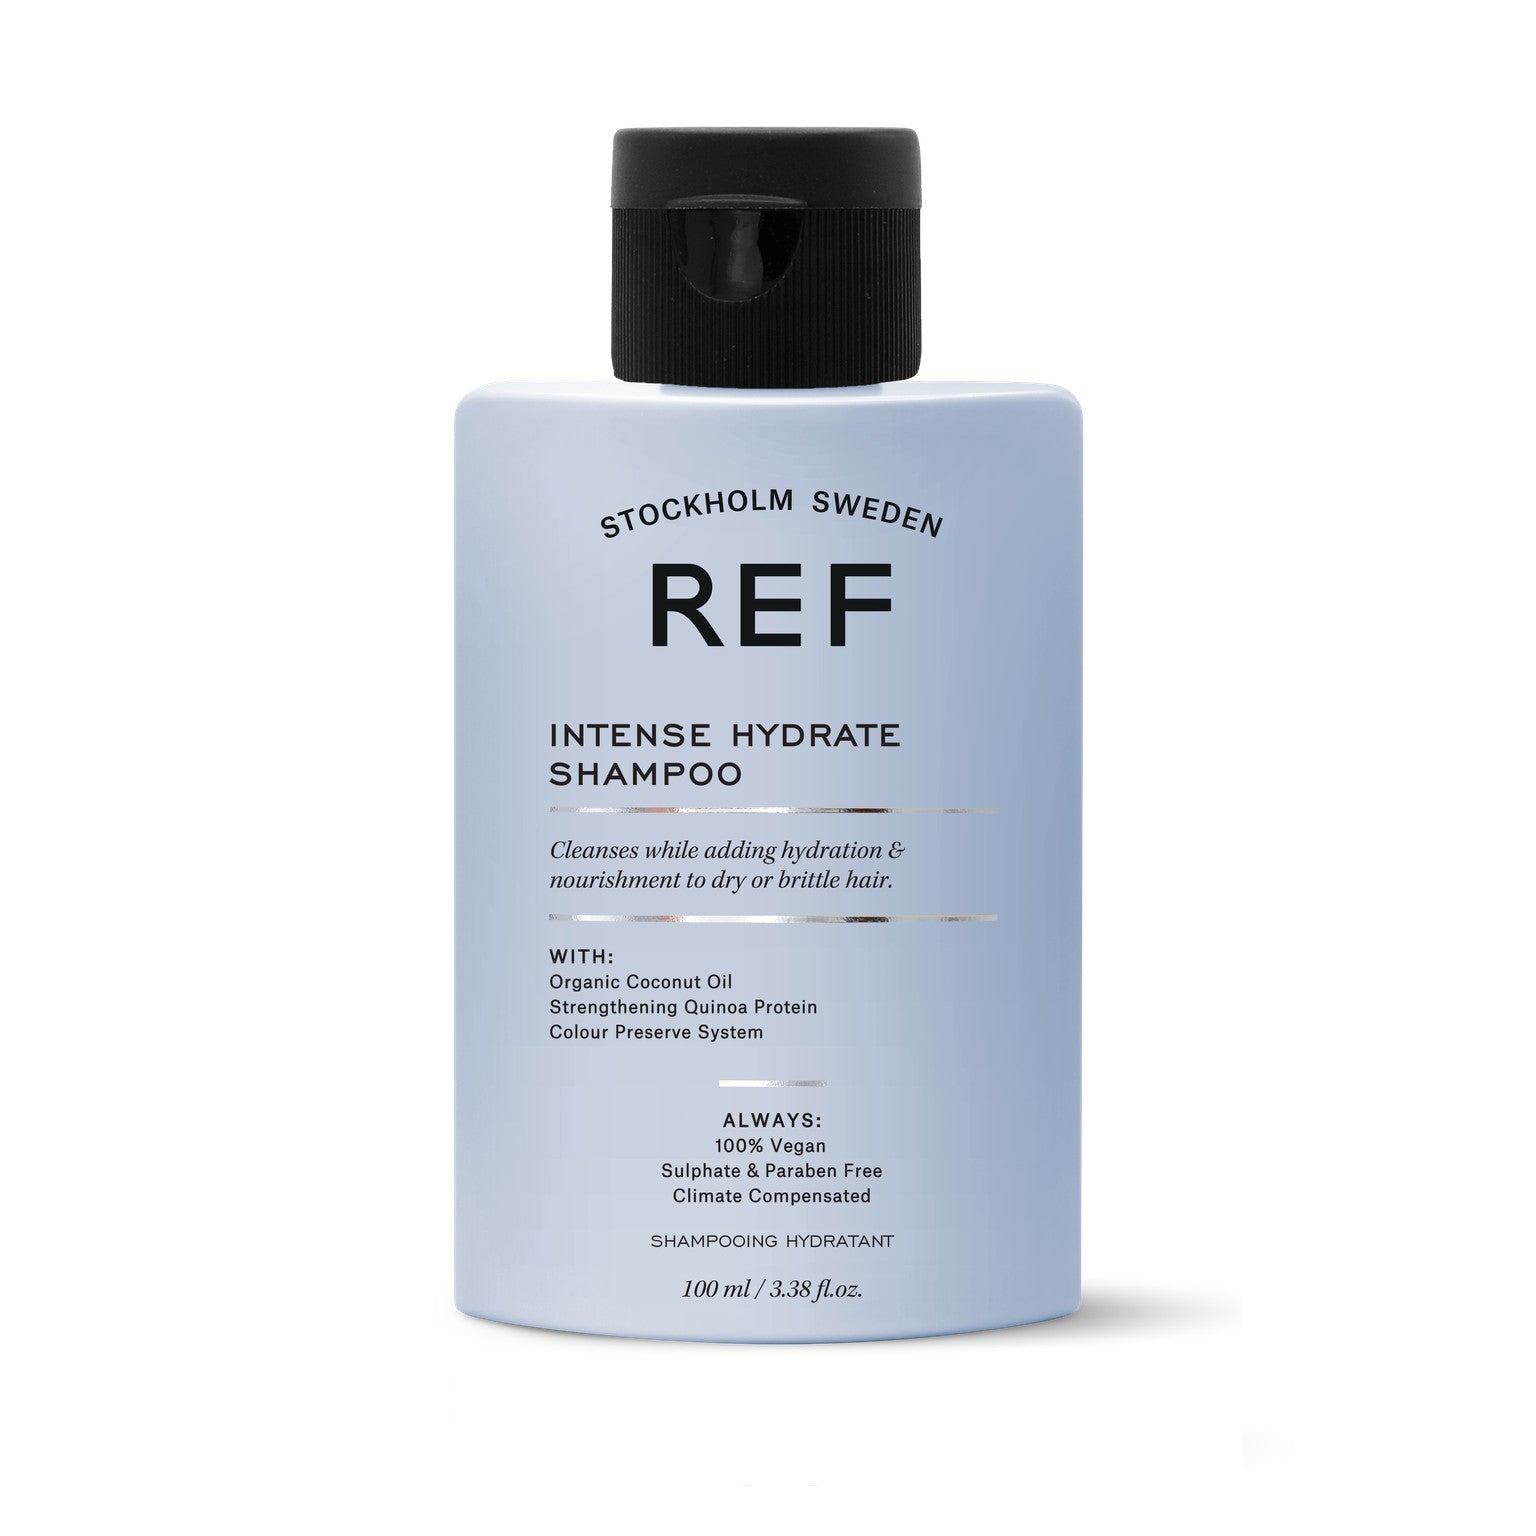 REF. Intense Hydrate Shampoo 100ml Travel Size